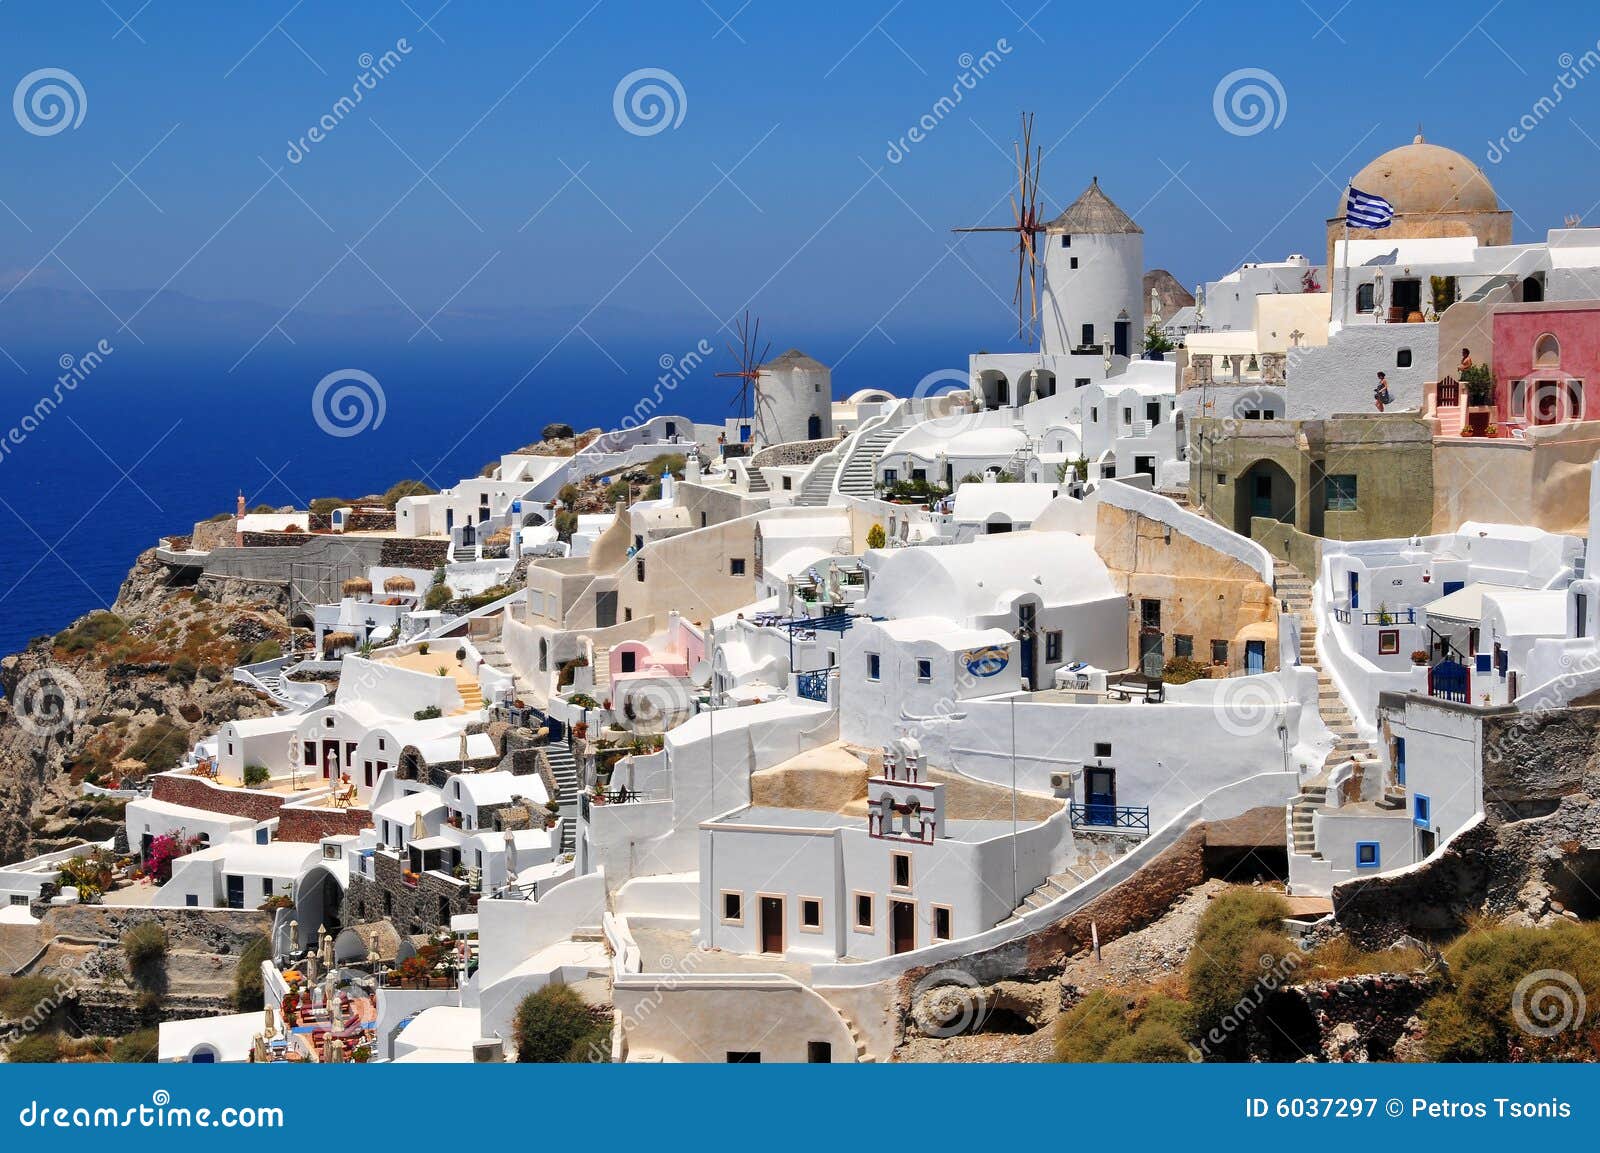 oia village, santorini island, greece